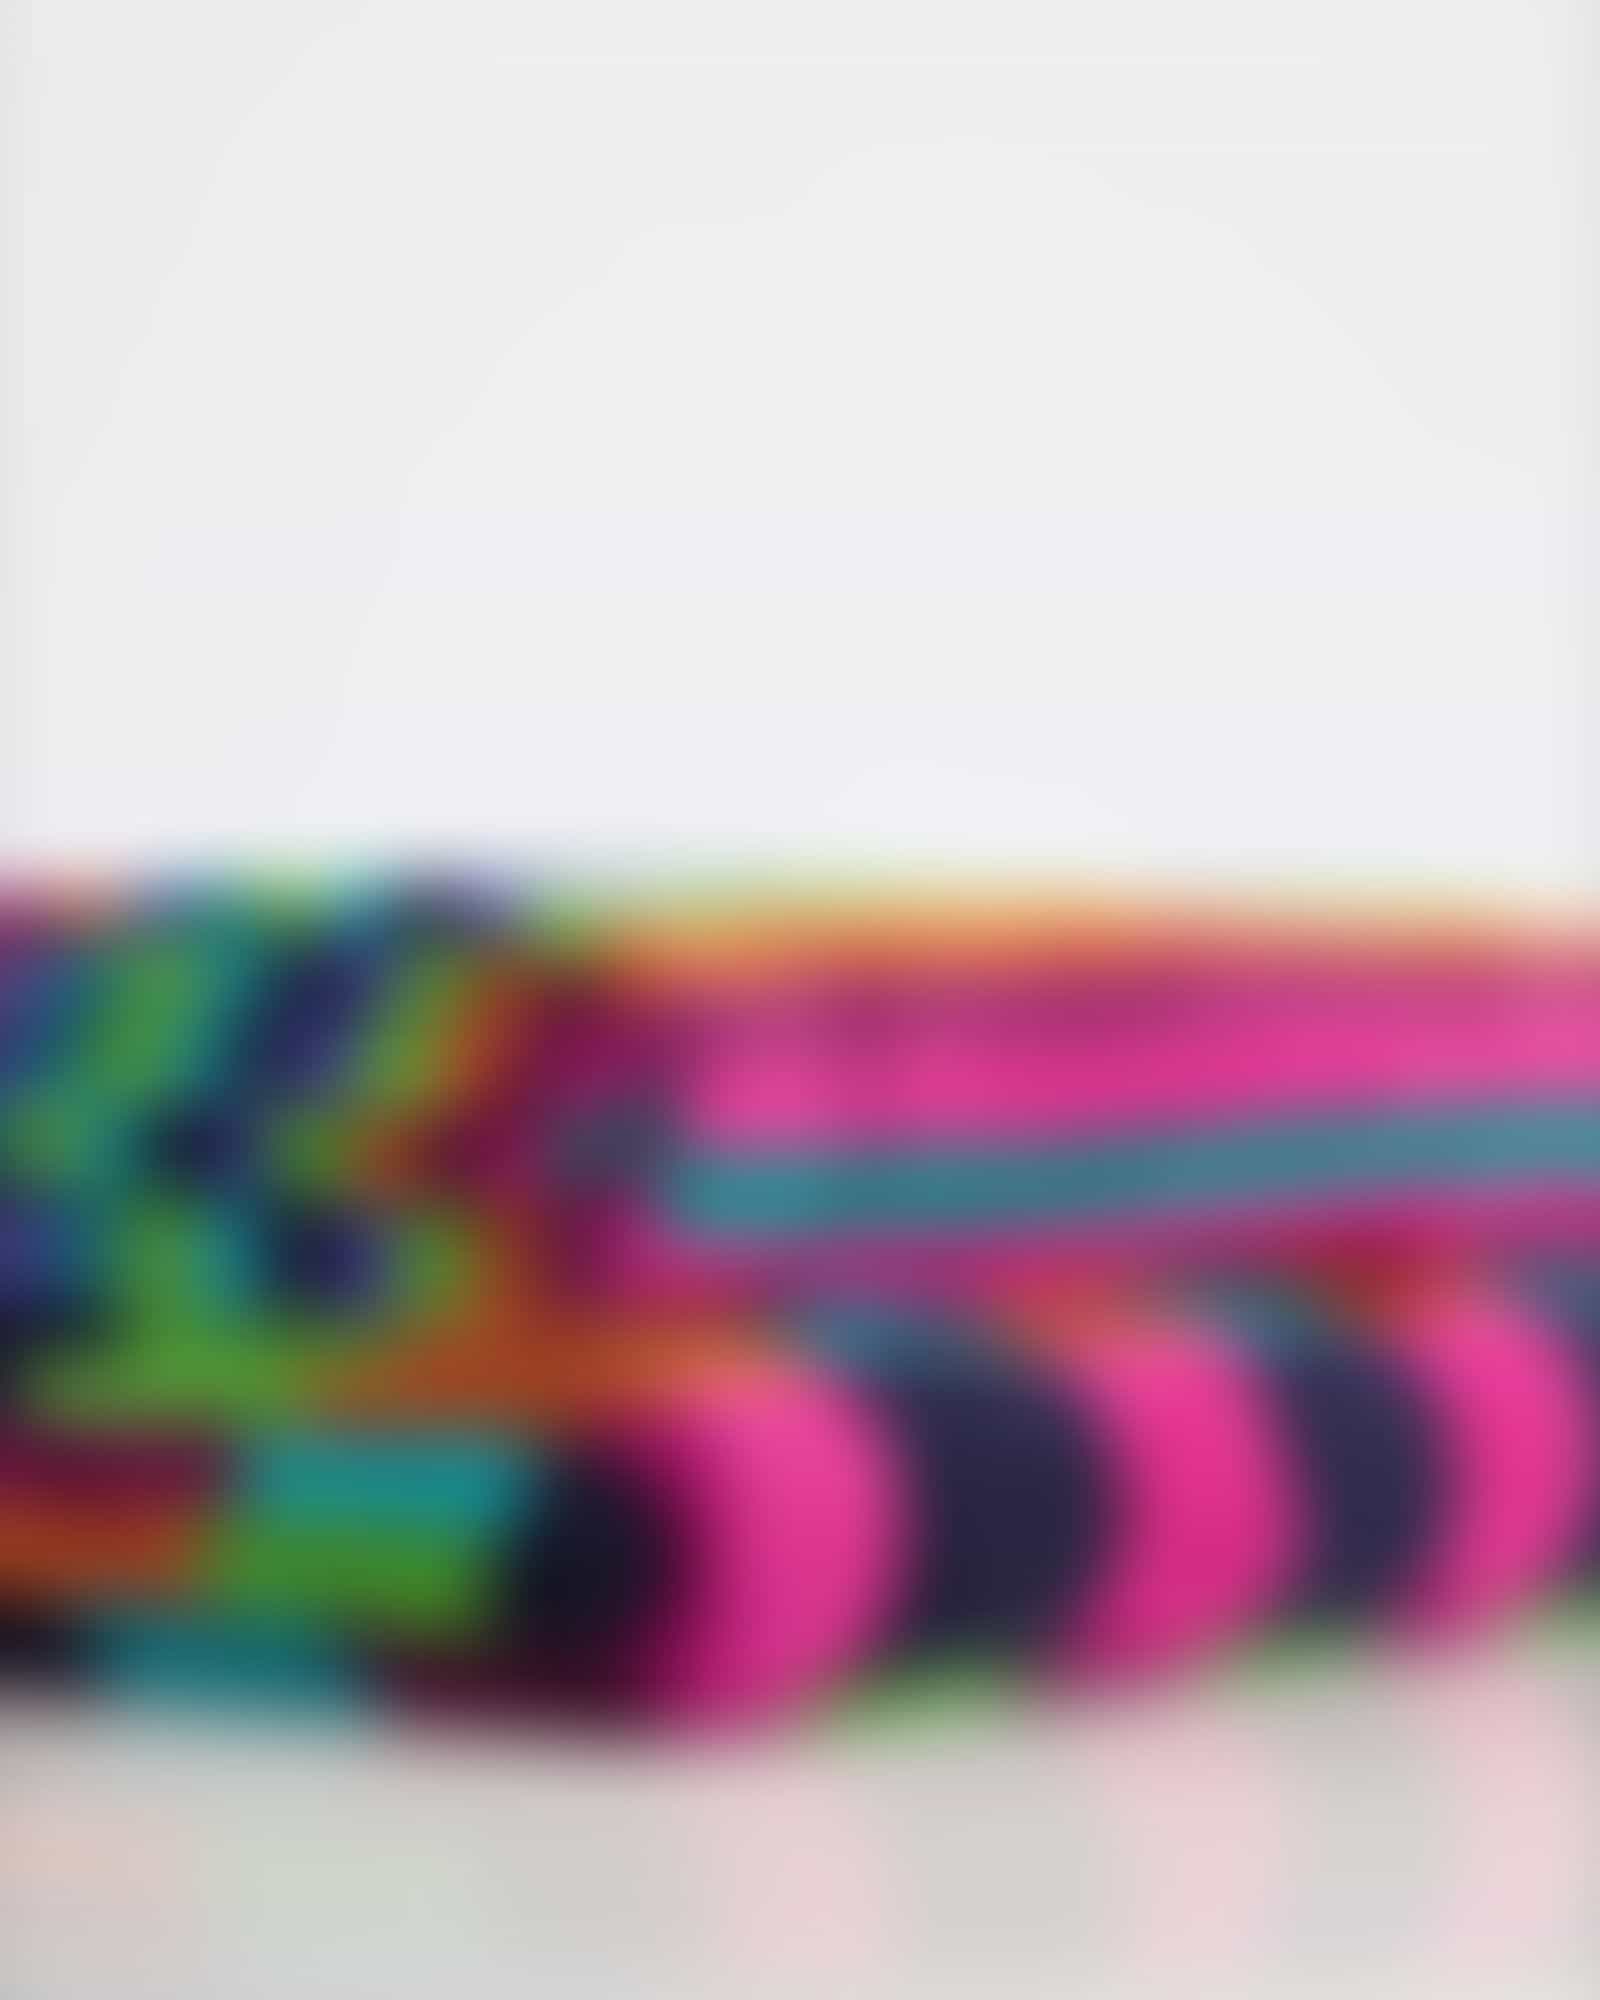 Cawö - Life Style Streifen 7048 - Farbe: 84 - multicolor - Handtuch 50x100 cm